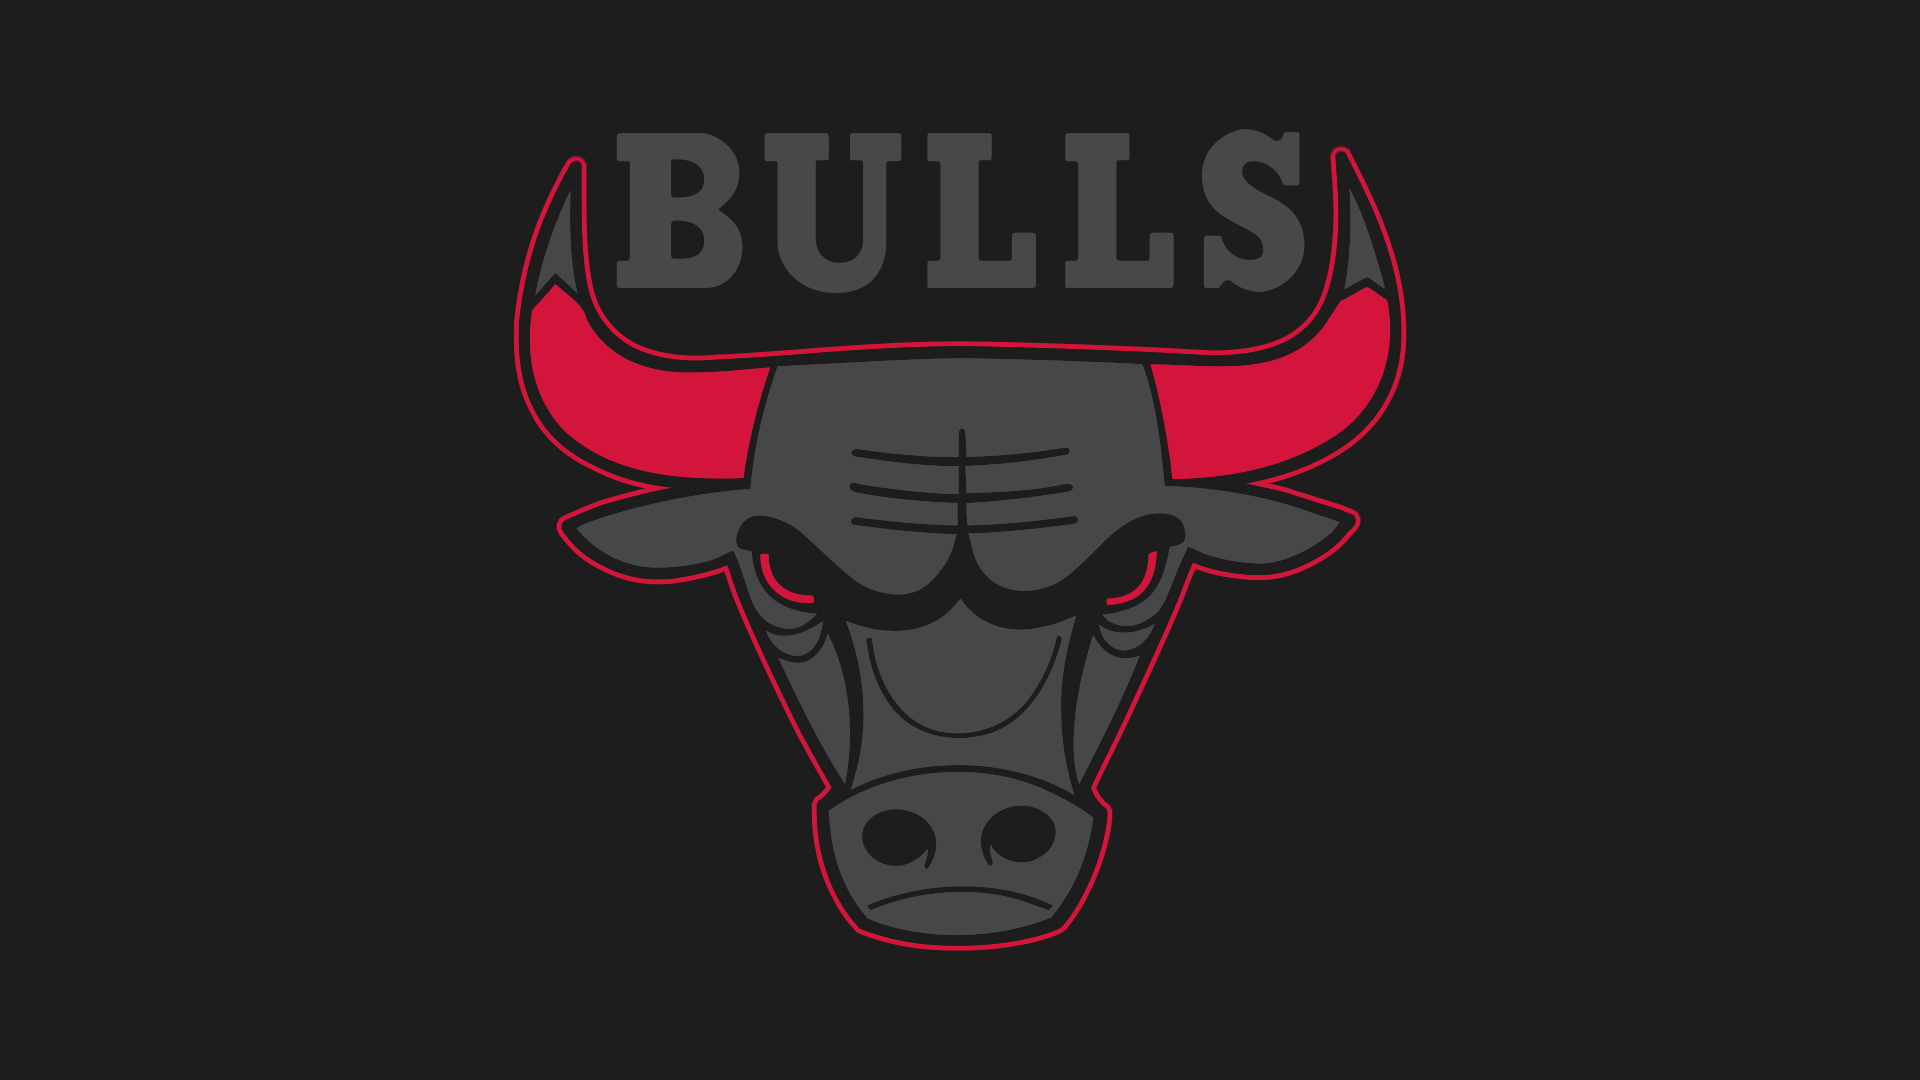 Free Bulls Wallpaper